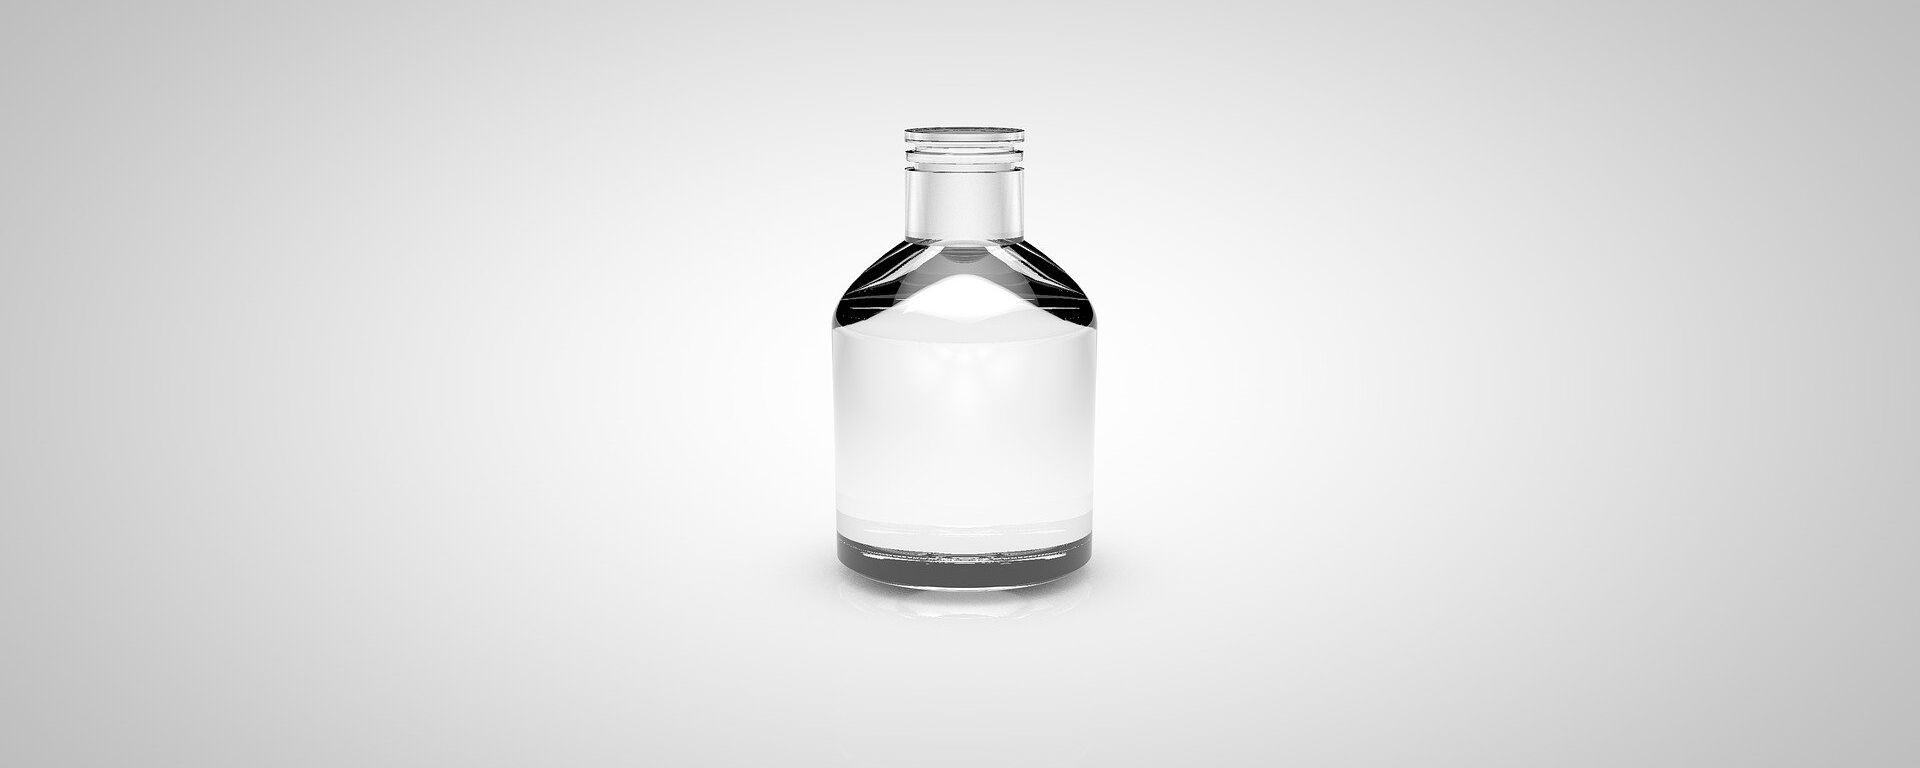 A small glass bottle  - Sputnik India, 1920, 15.12.2022